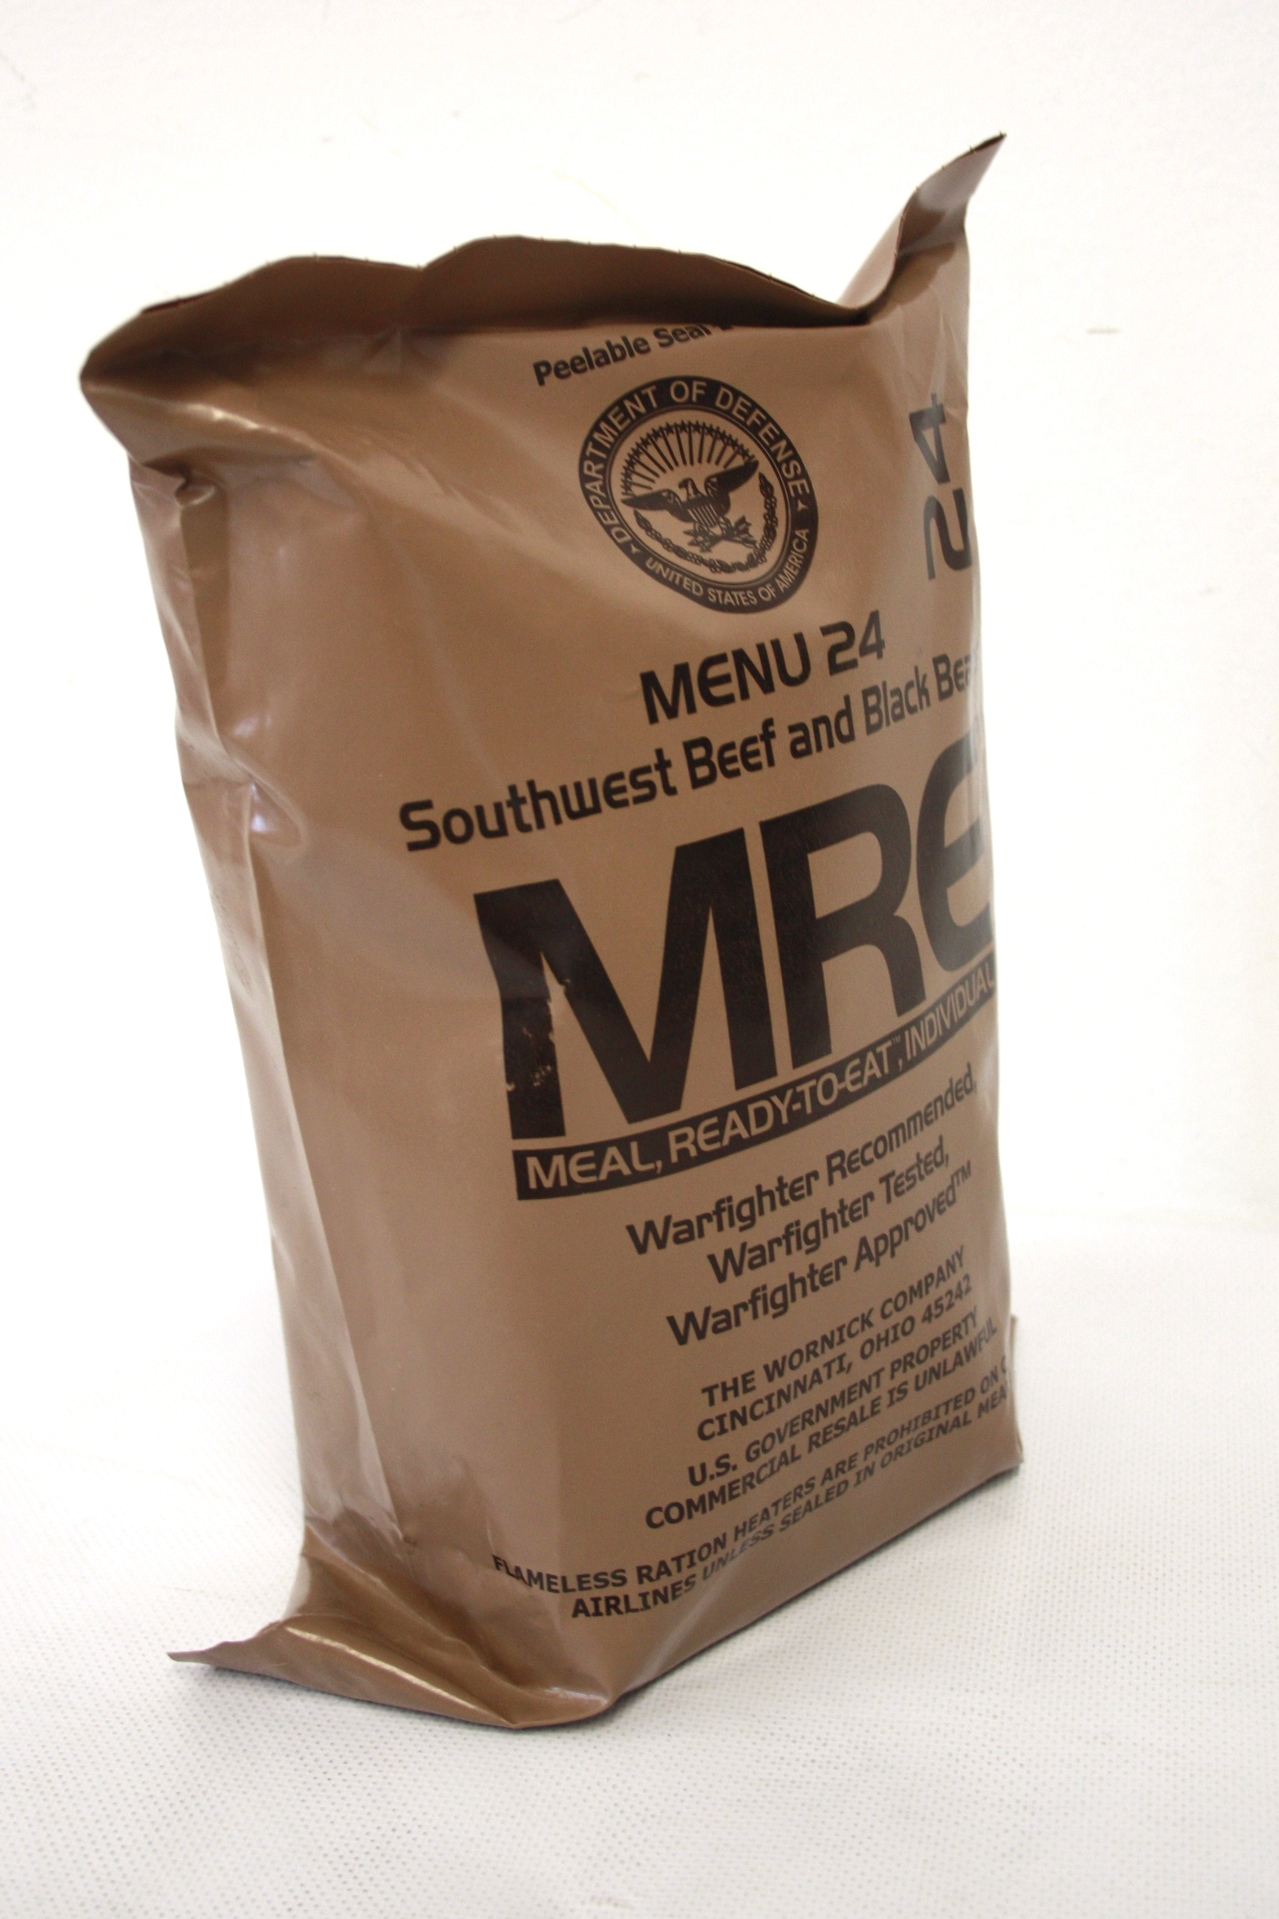 MRE Meals - HQ Company/Surplus Warrior